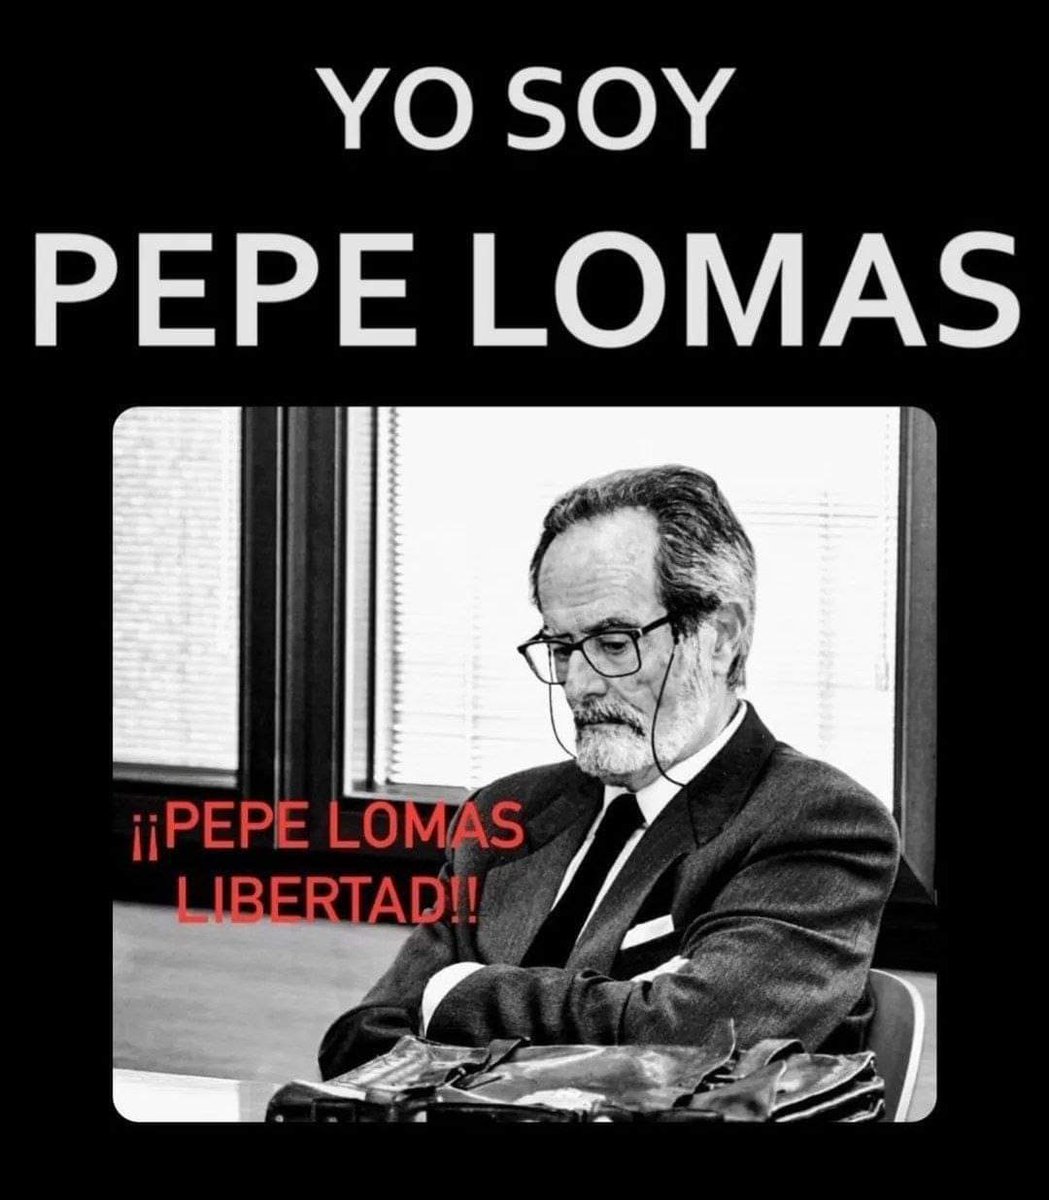 #YoSoyPepeLomas